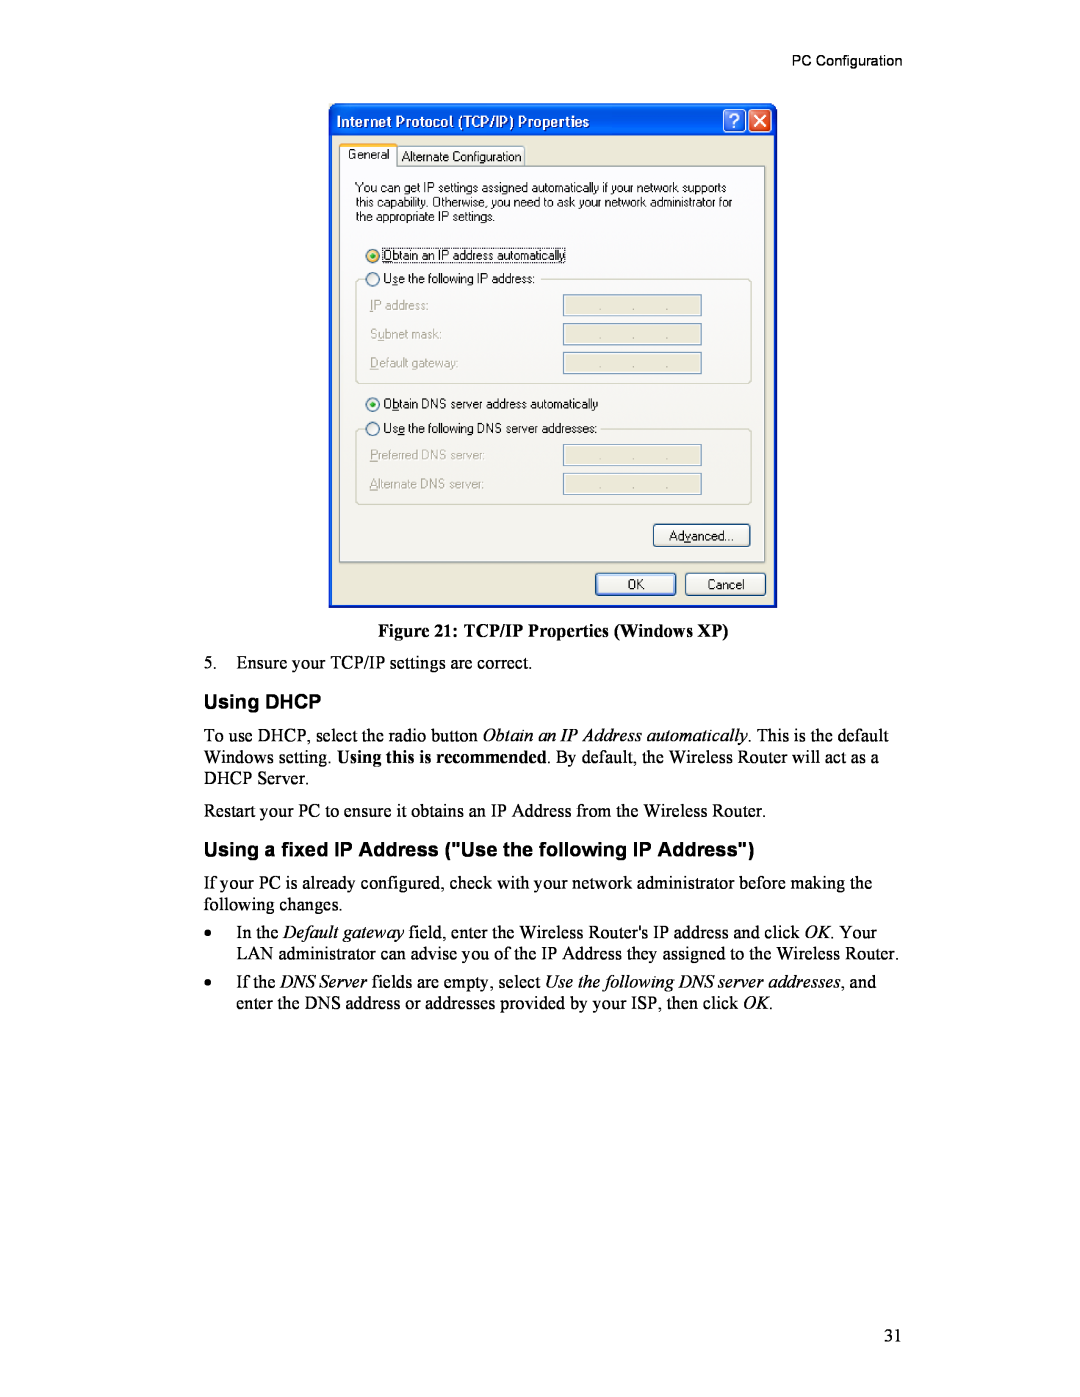 Hawking Technology HWR54G manual TCP/IP Properties Windows XP 